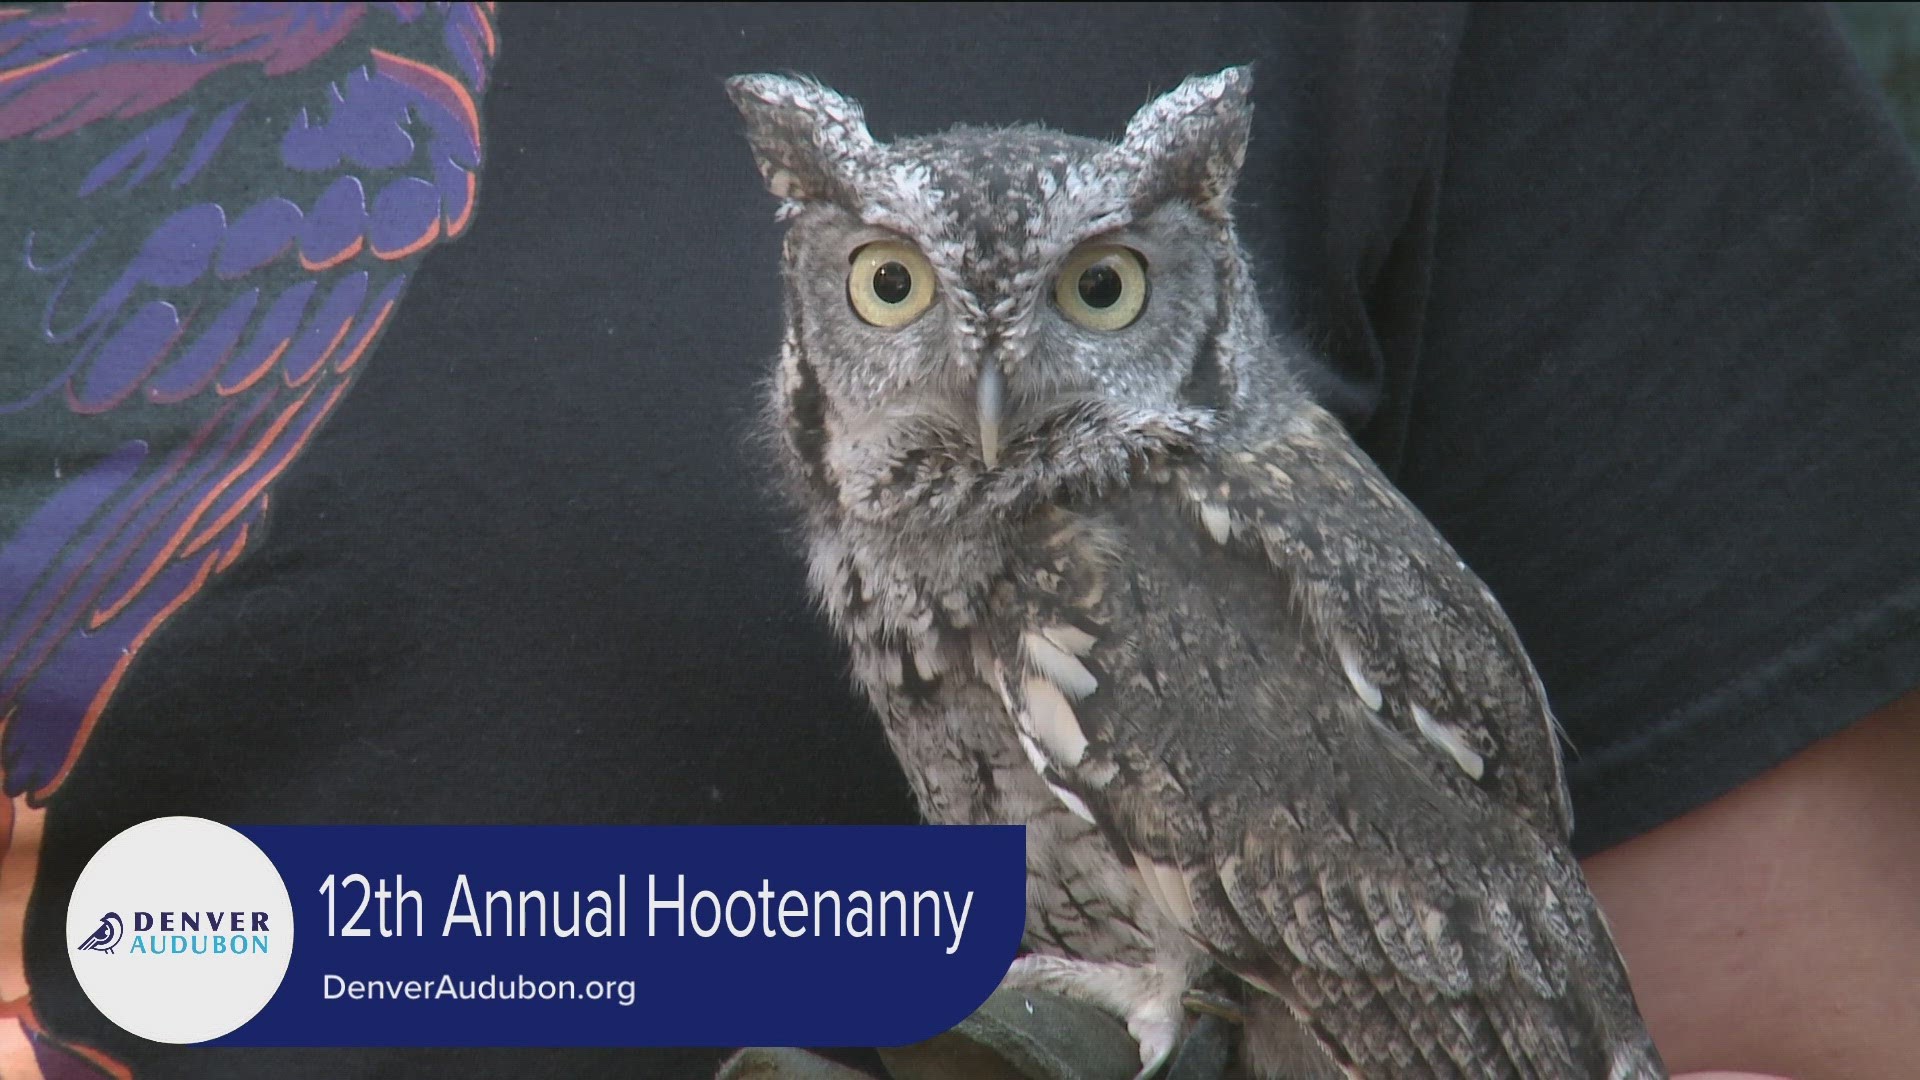 The 12th Annual Denver Audubon Hootenanny happens on September 30th. Register and learn more at DenverAudubon.org.